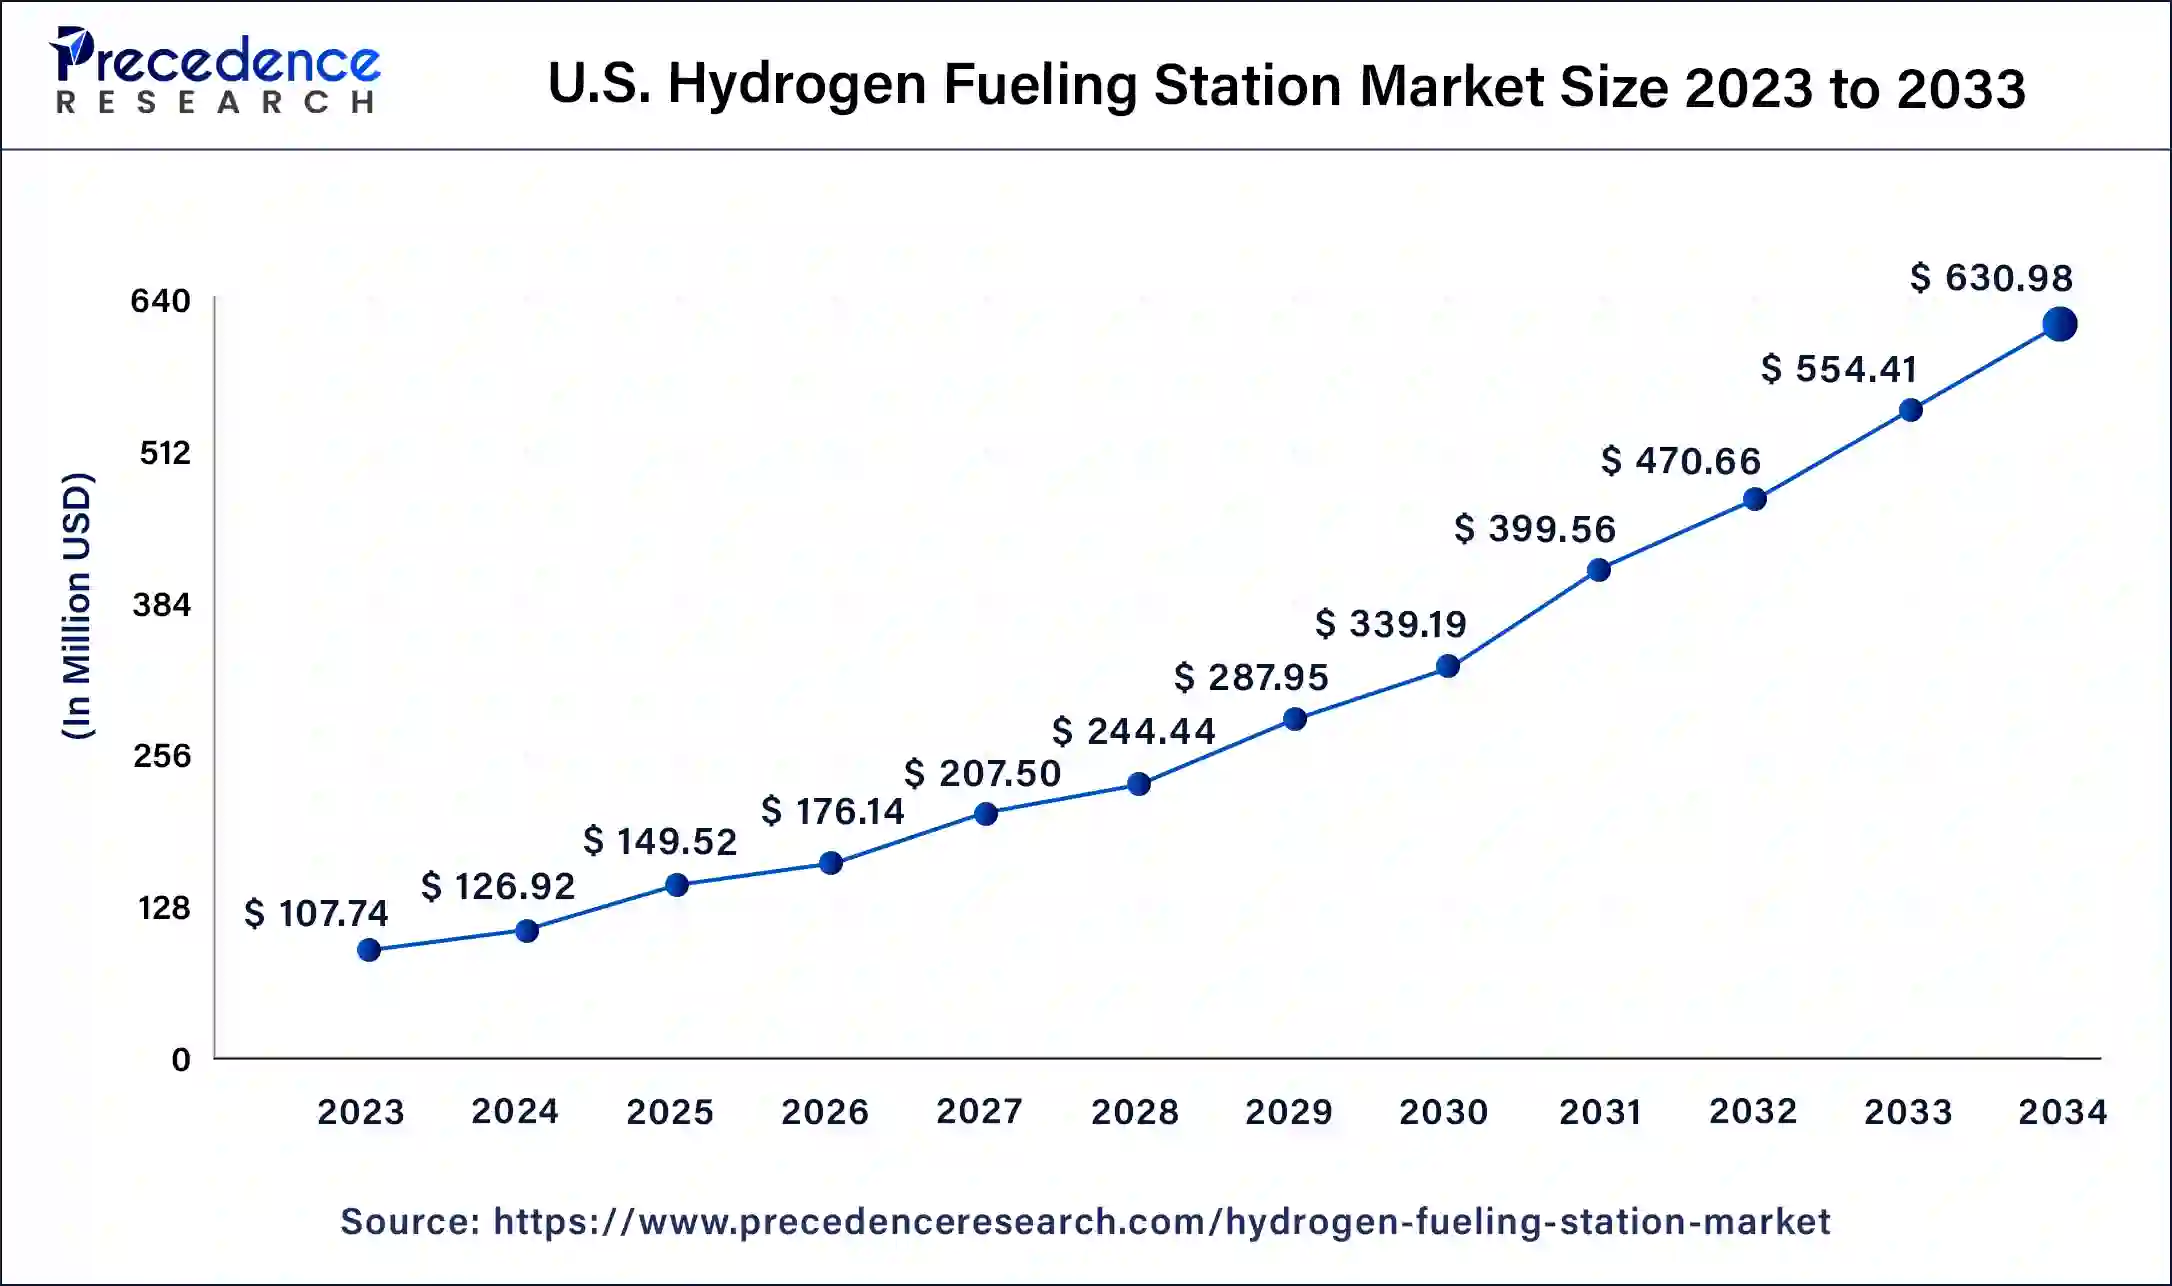 U.S. Hydrogen Fueling Station Market Size 2024 to 2034